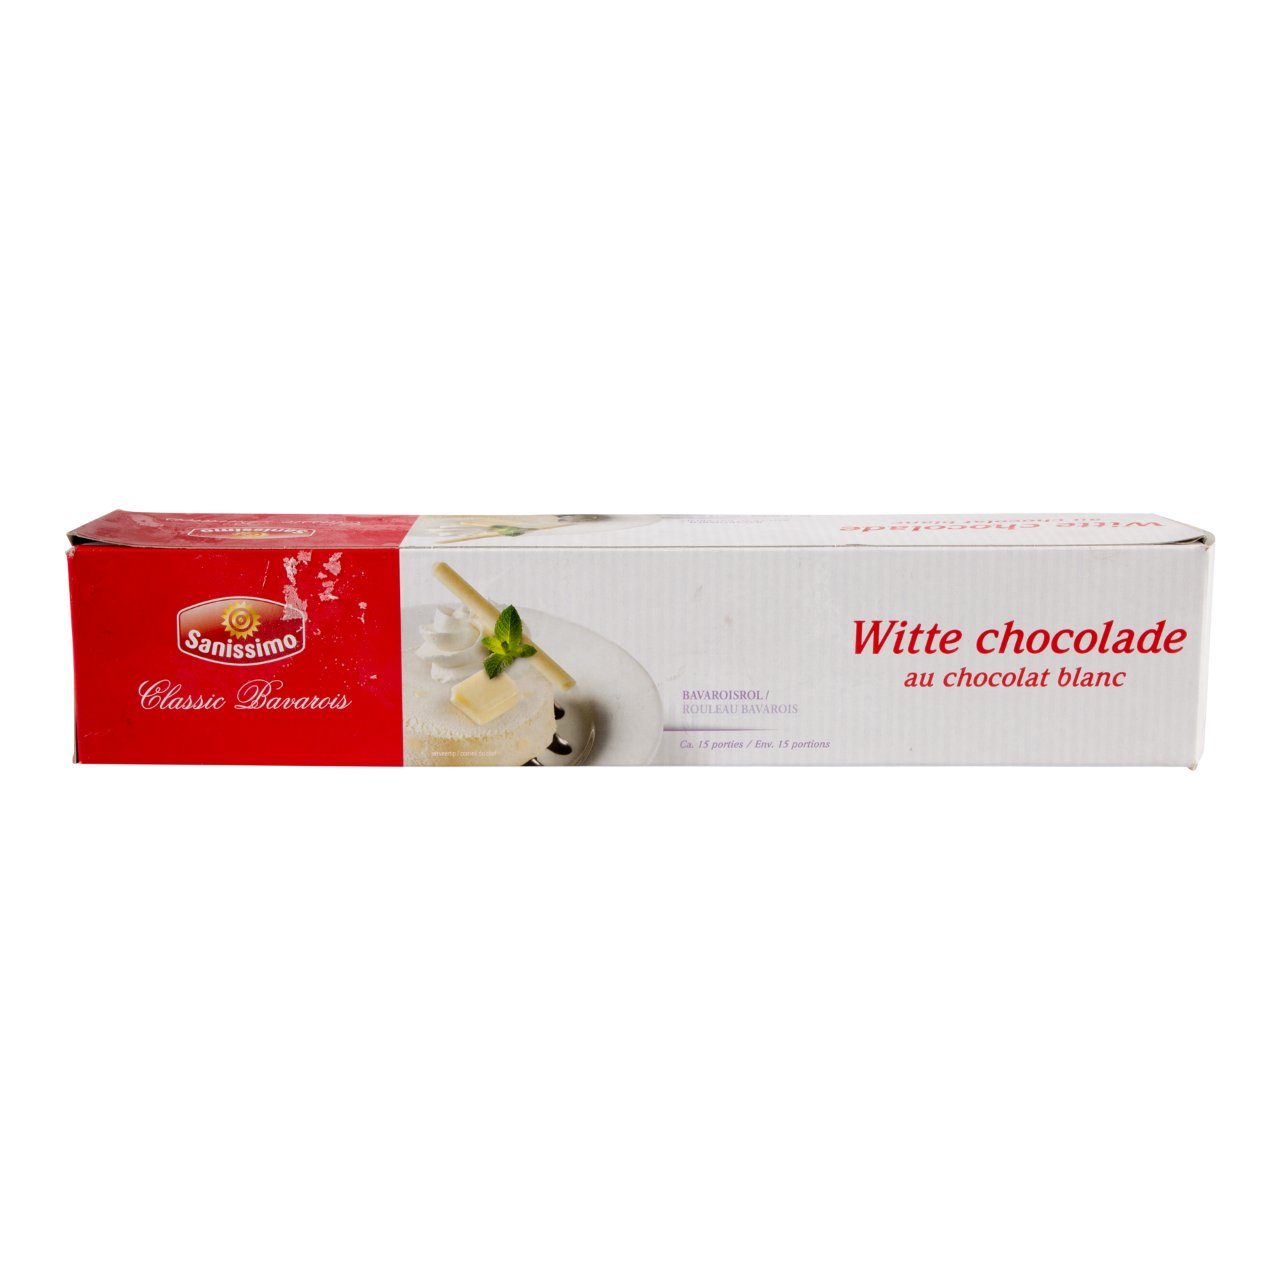 Bavarois witte chocolade